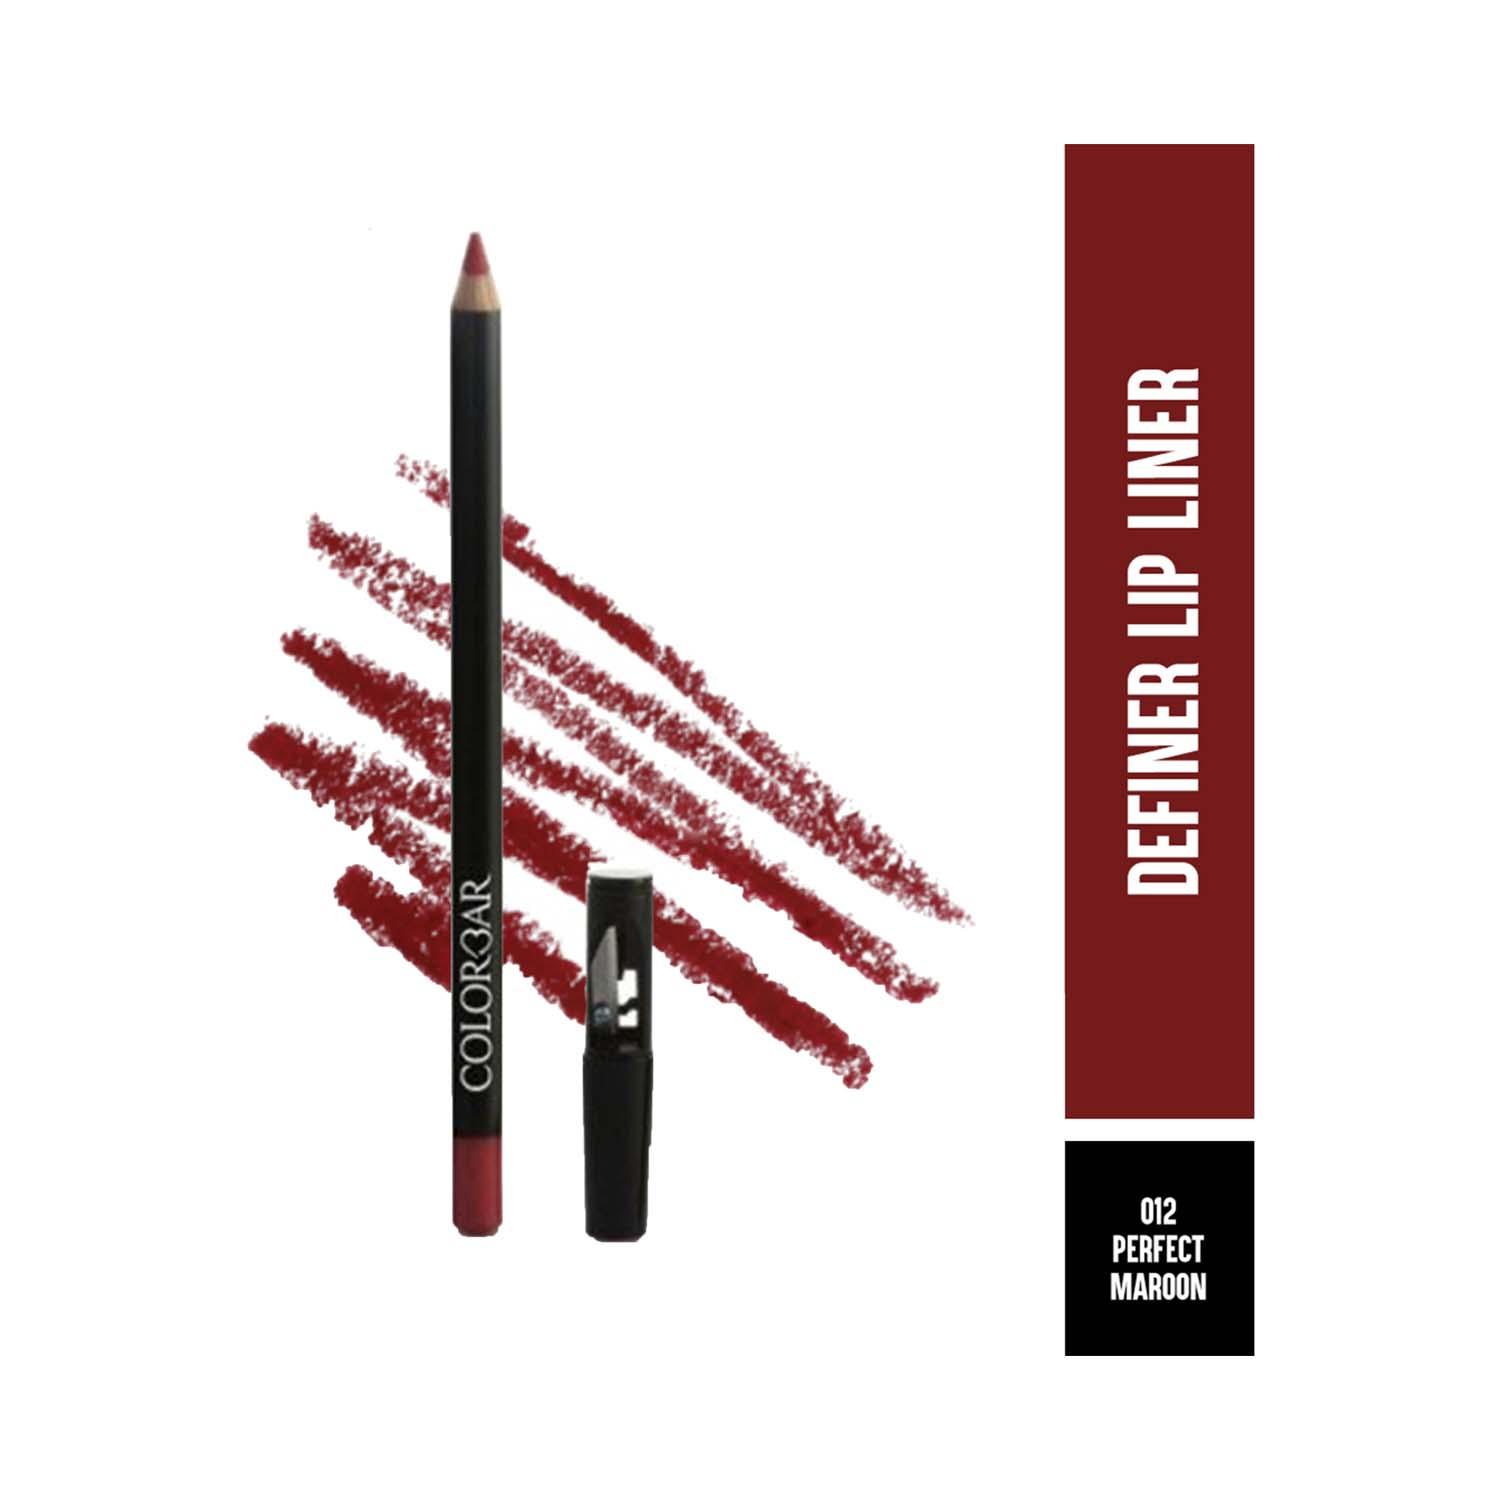 Colorbar | Colorbar Definer Lip Liner - New Perfect Maroon - [012] (1.45 g)